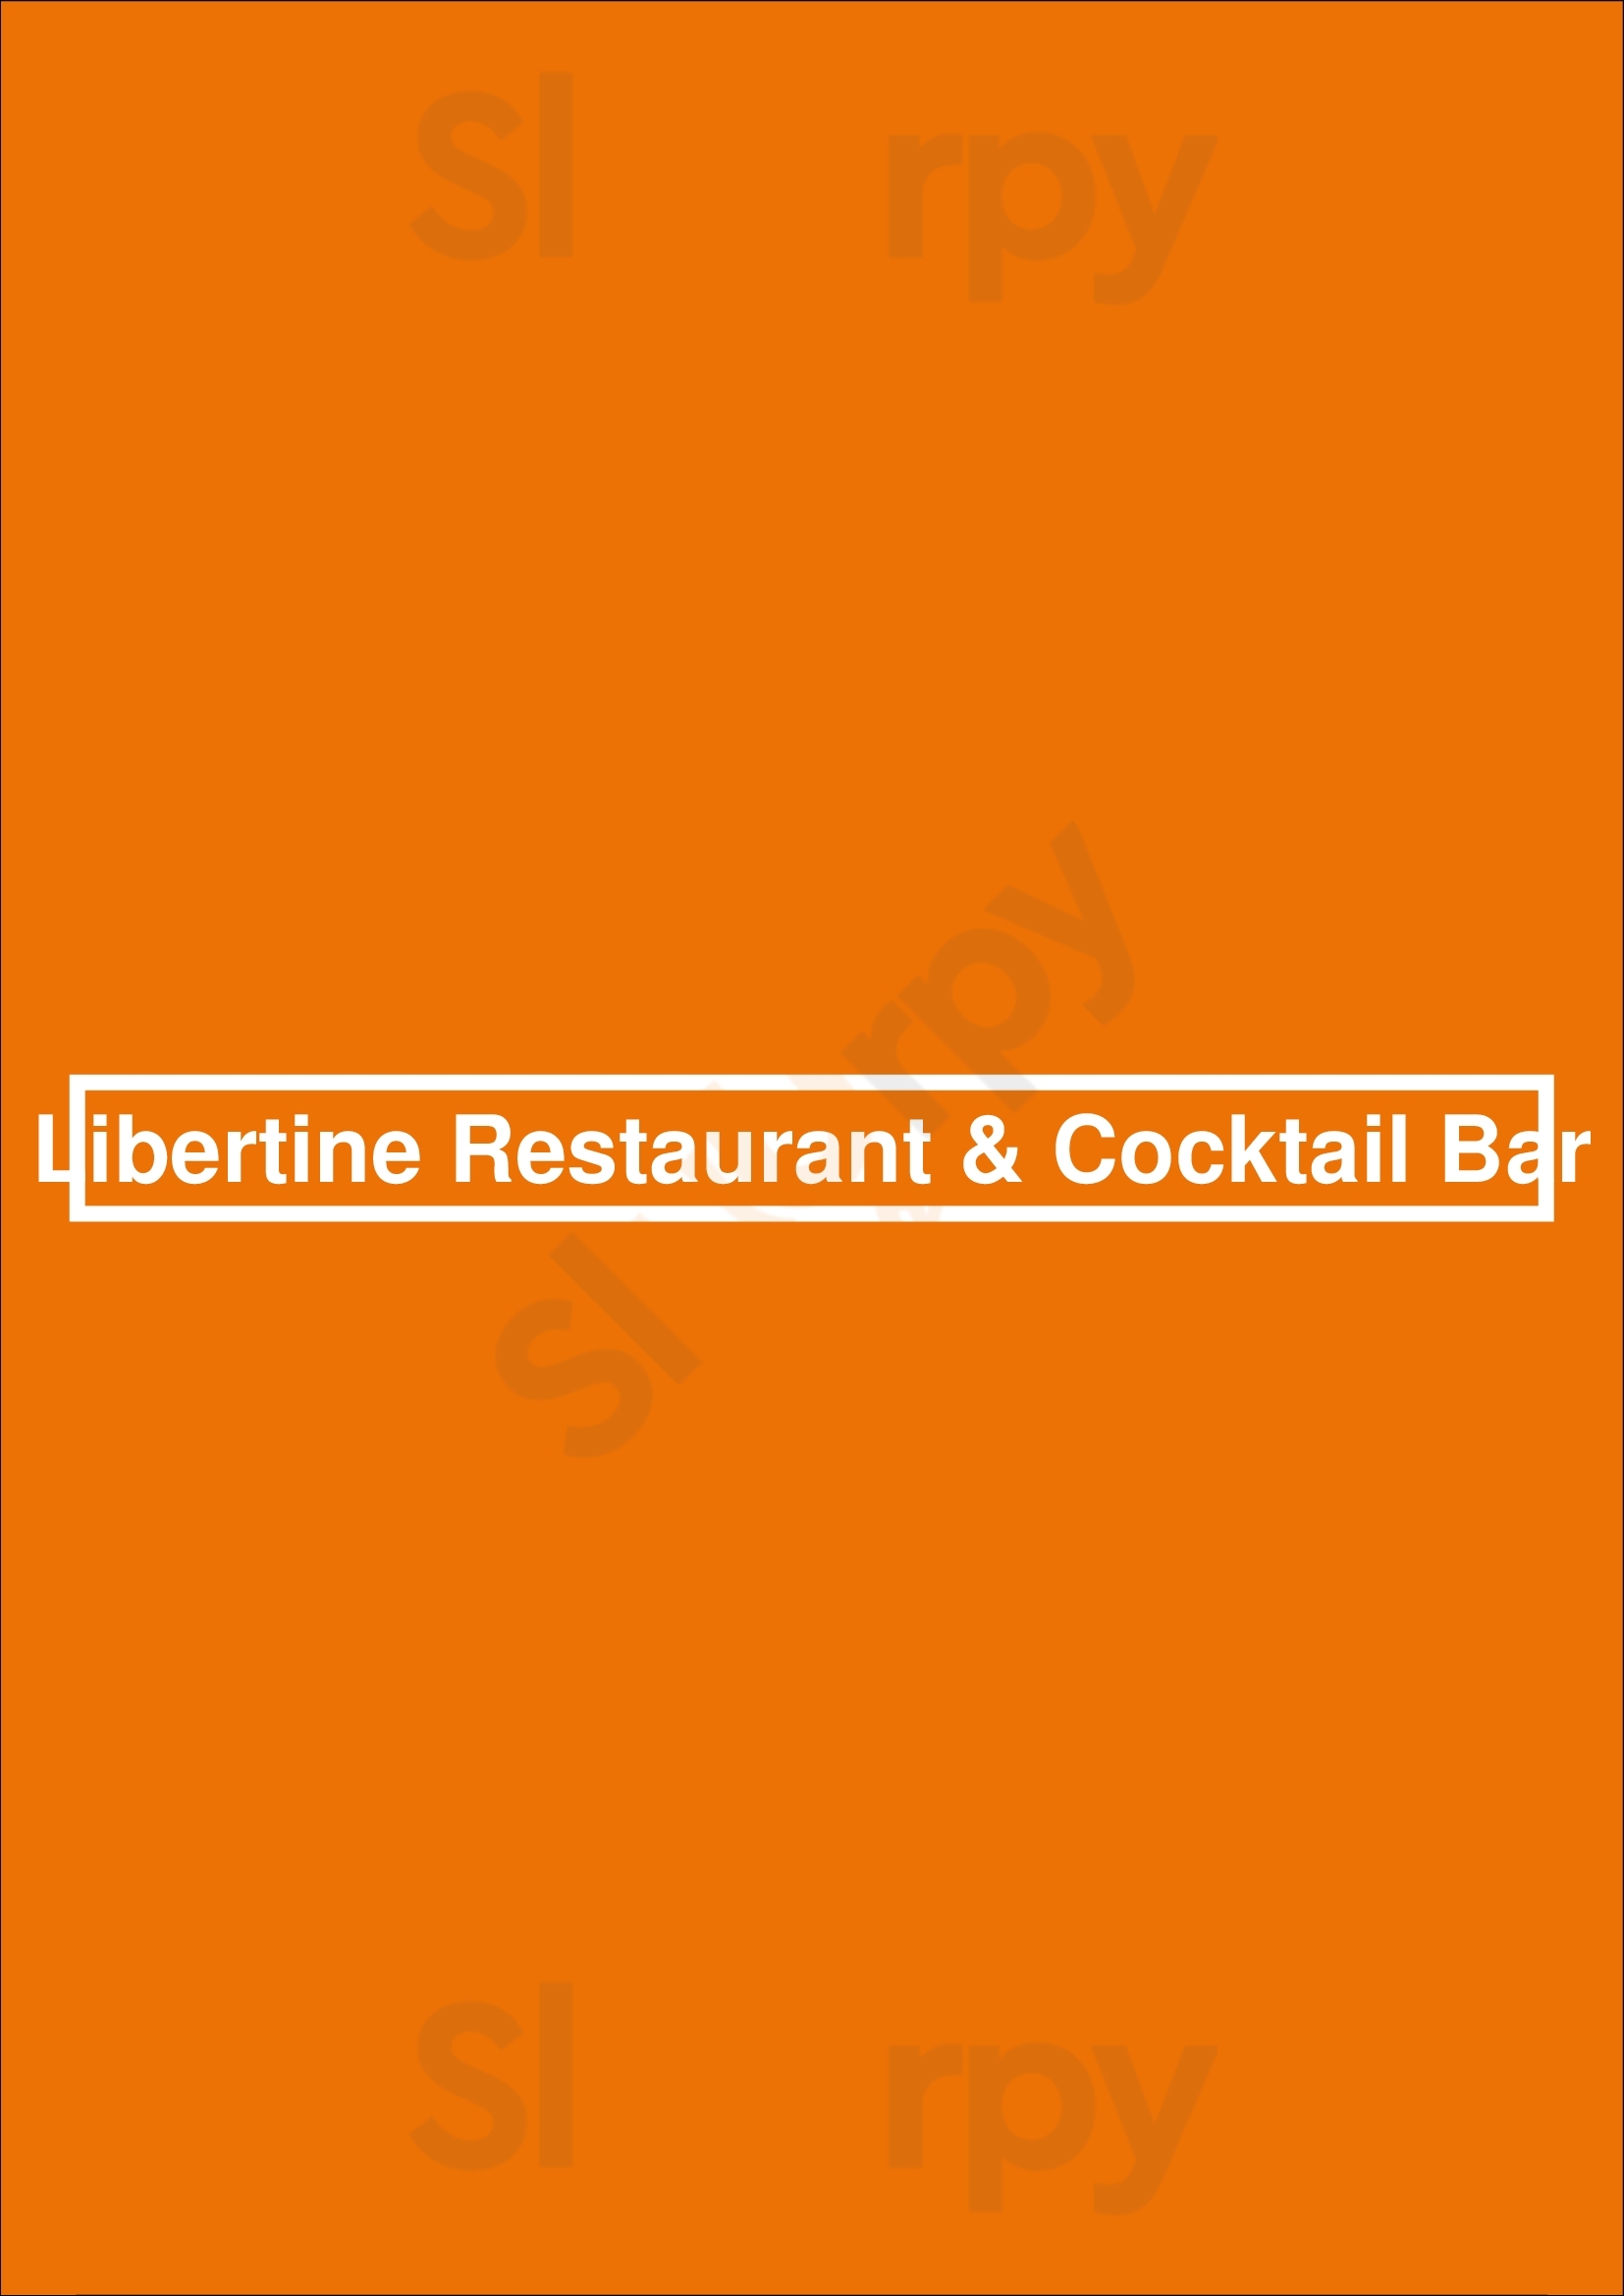 Libertine Restaurant & Cocktail Bar Brisbane Menu - 1